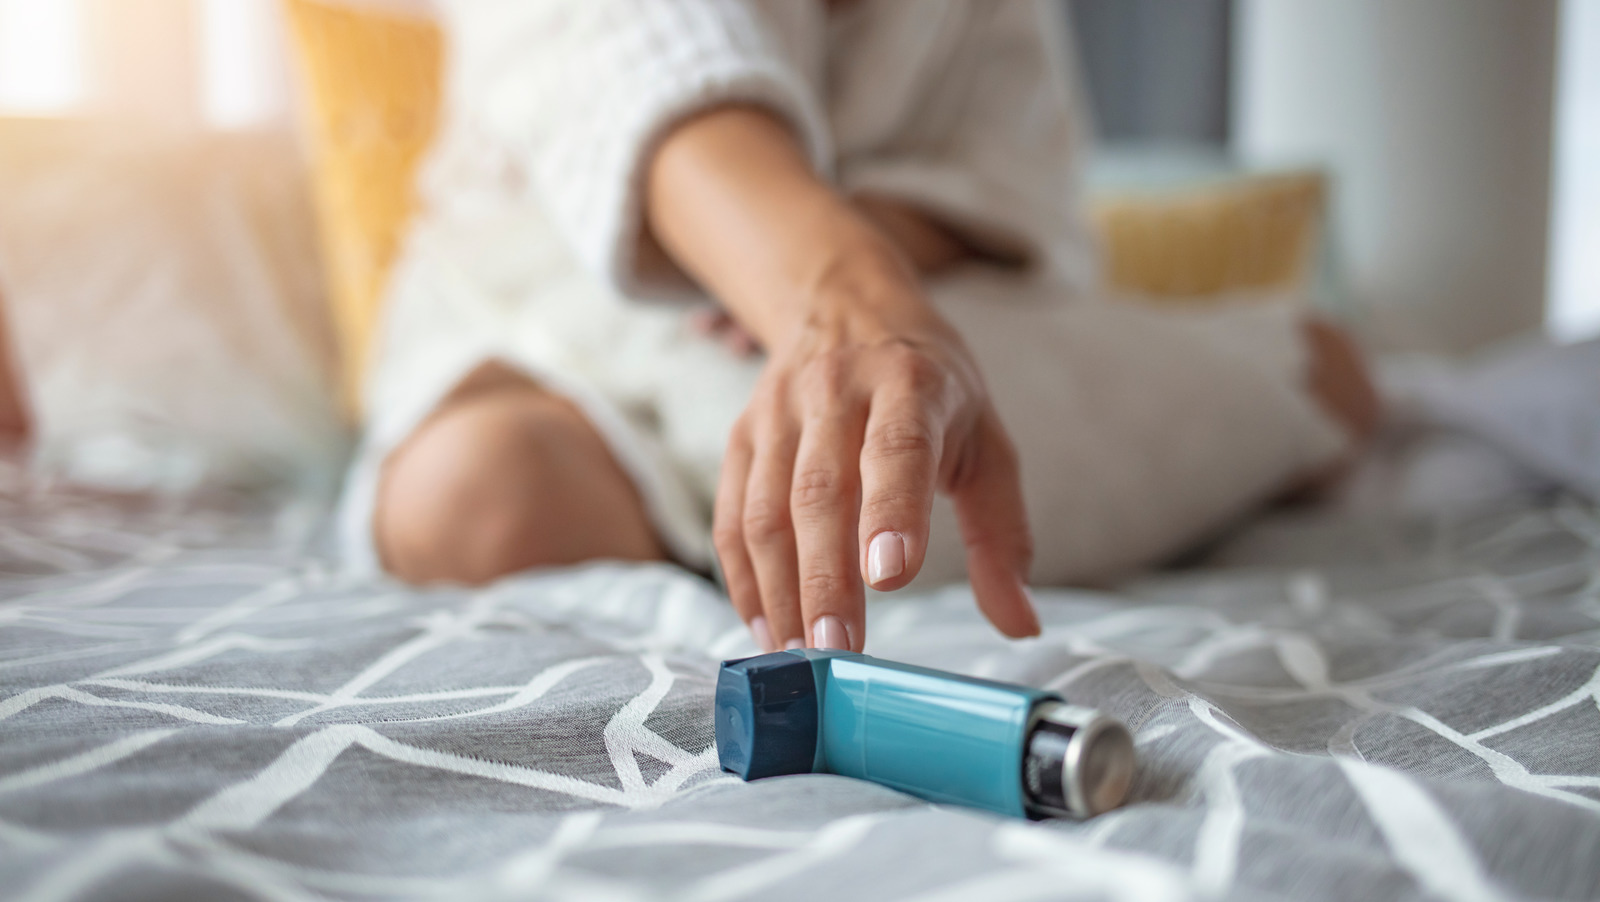 asthma sneaky asma cymbalta crises ajudam acalmar bijden predict illness infection experienced doomsday resilinc histamine gordic dragana ajudar meltingood